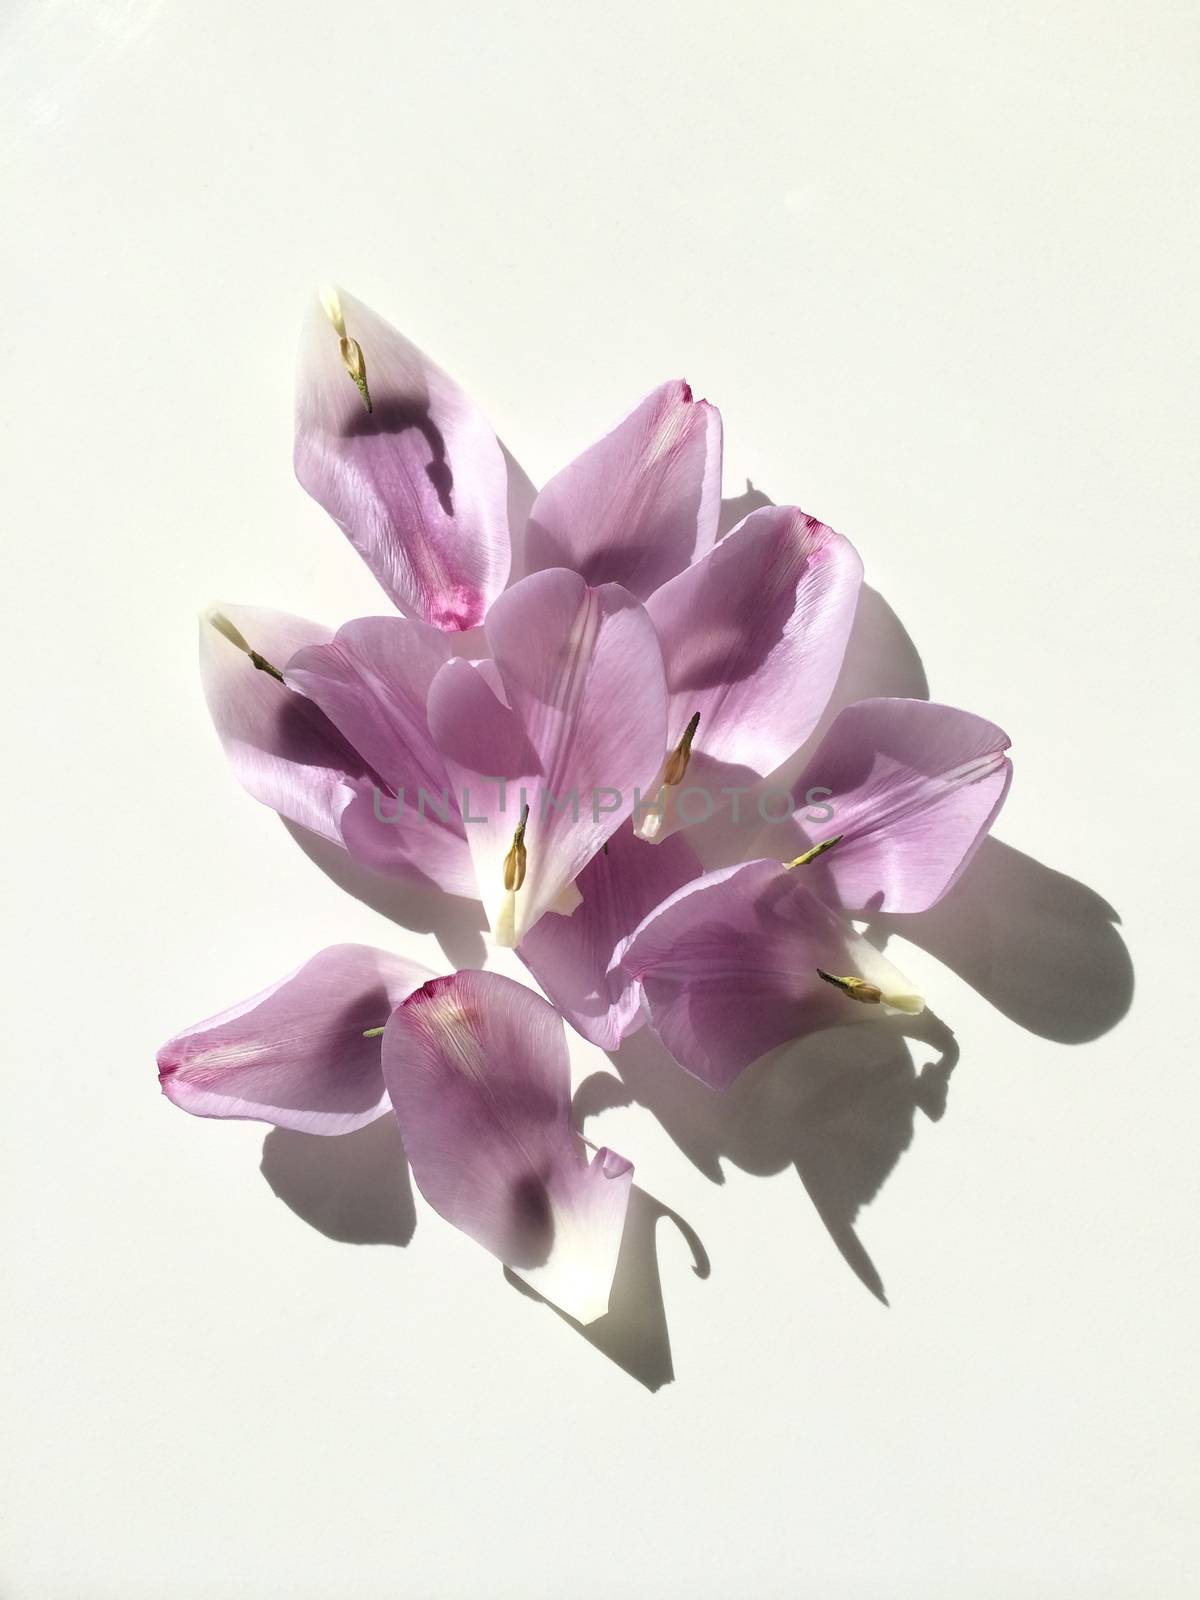 Tulip petals by mmm